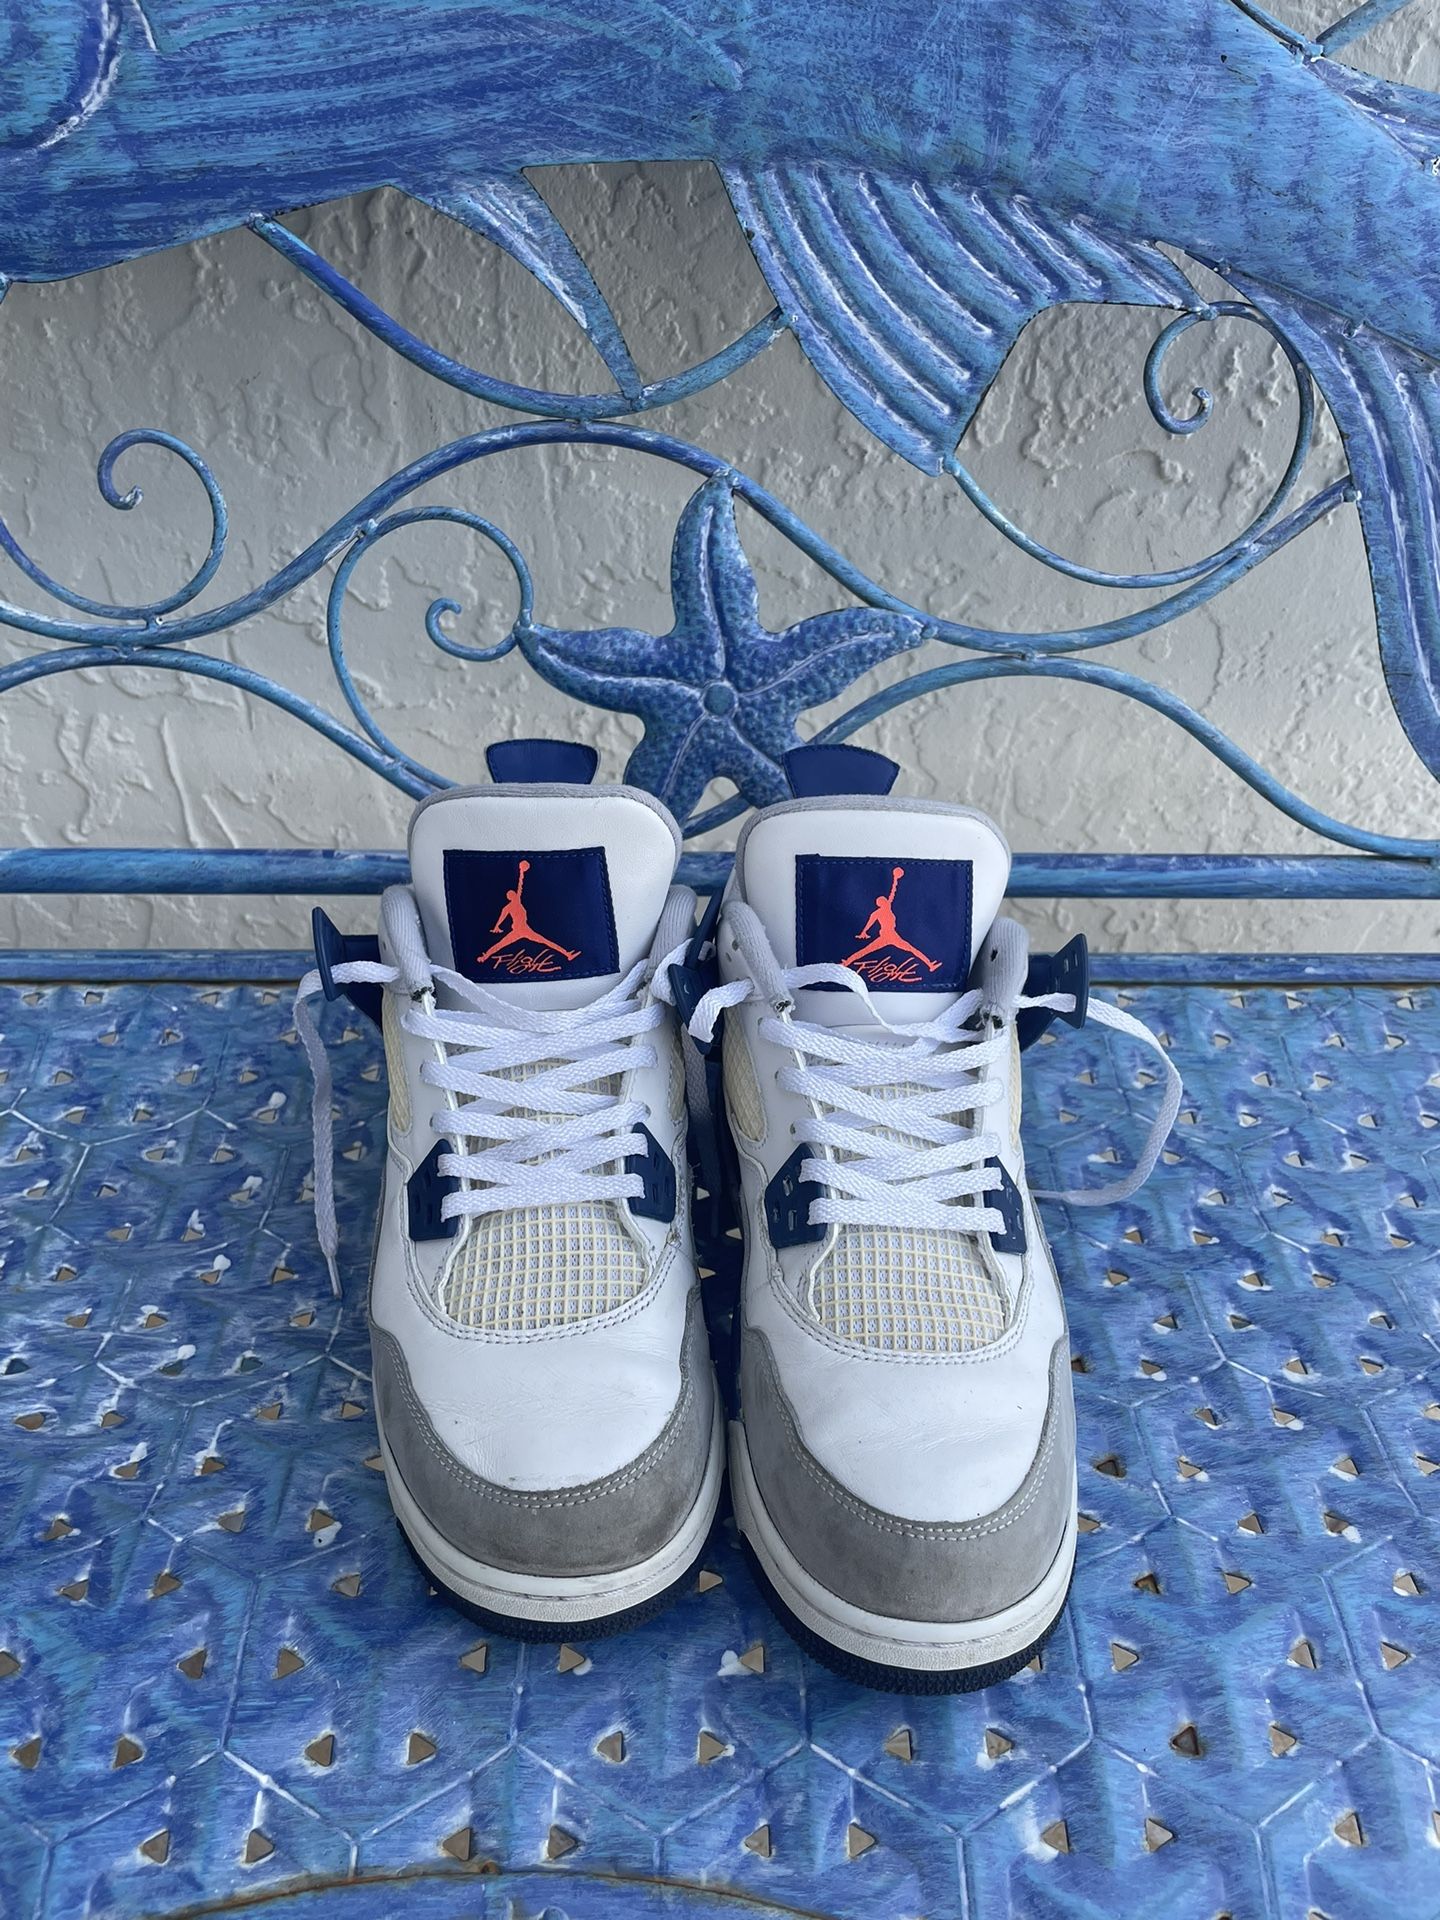 Air Jordan 4’s Size 8.5